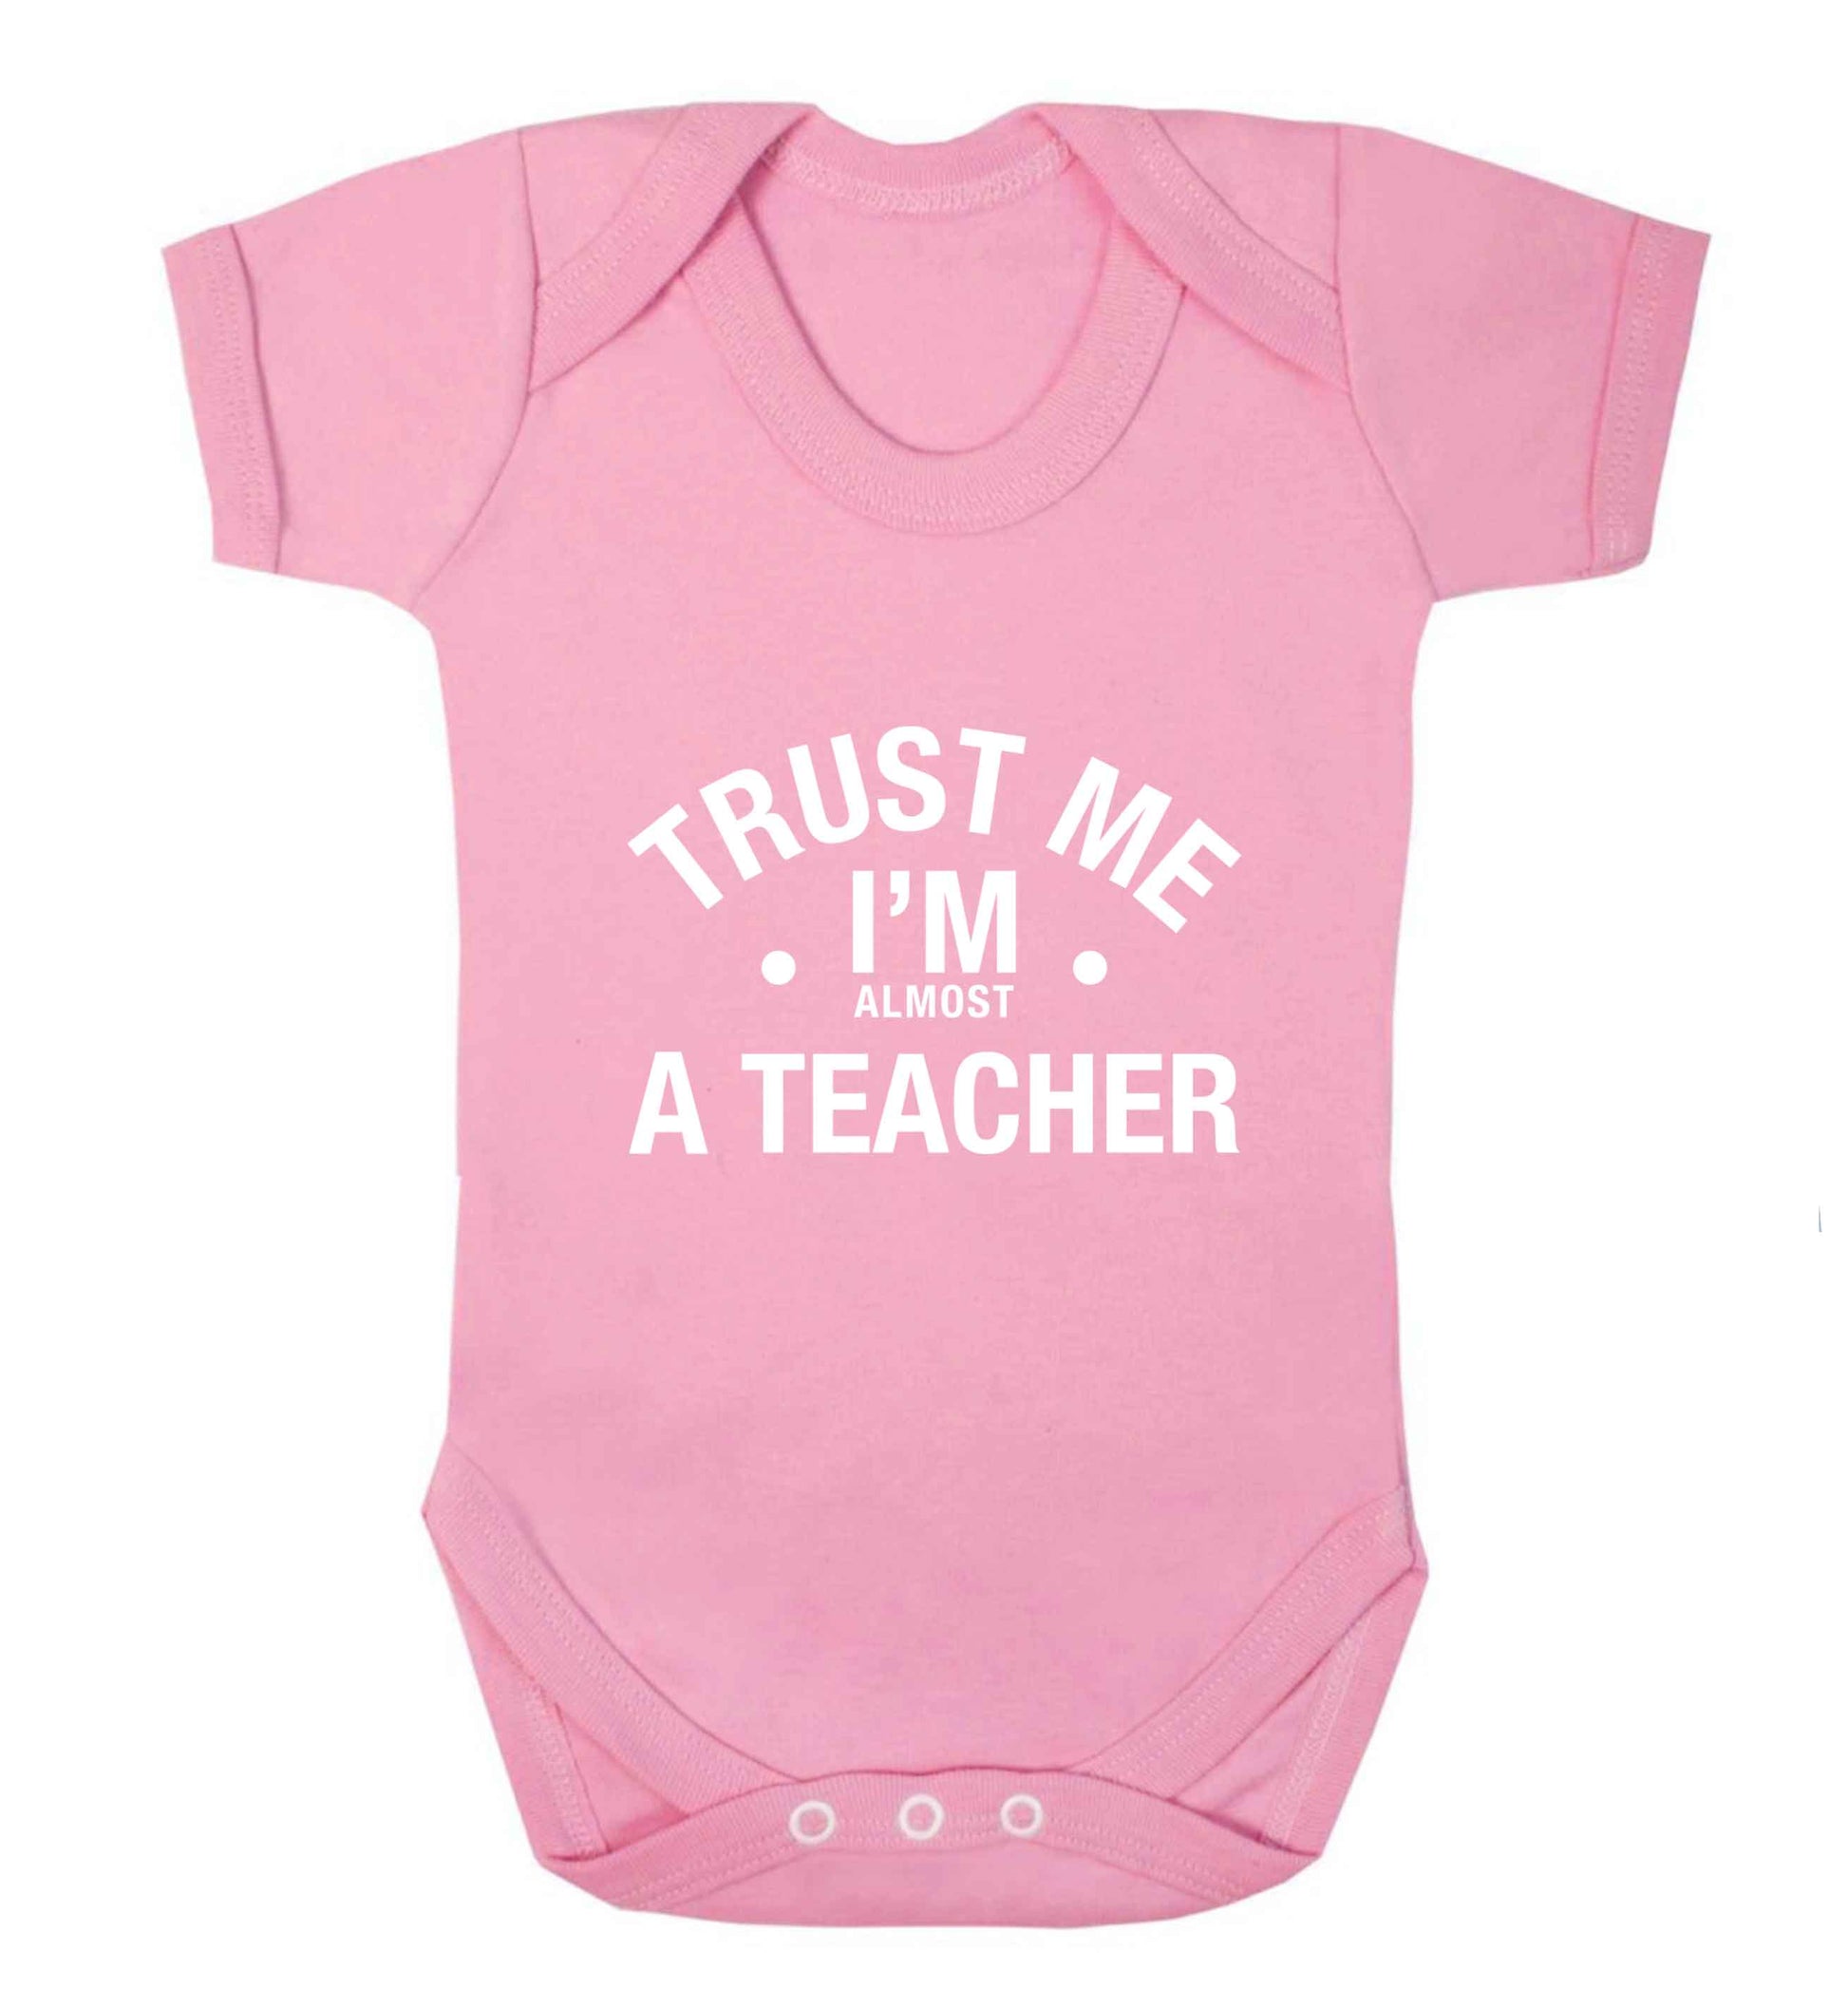 Trust me I'm almost a teacher baby vest pale pink 18-24 months